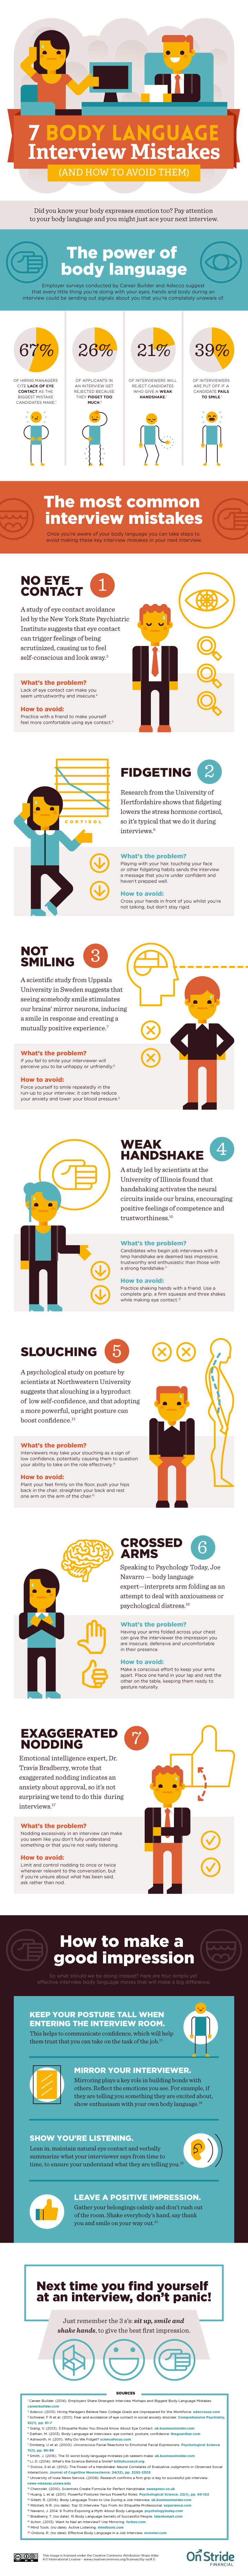 7 Body Language Job Interview Mistakes Infographic